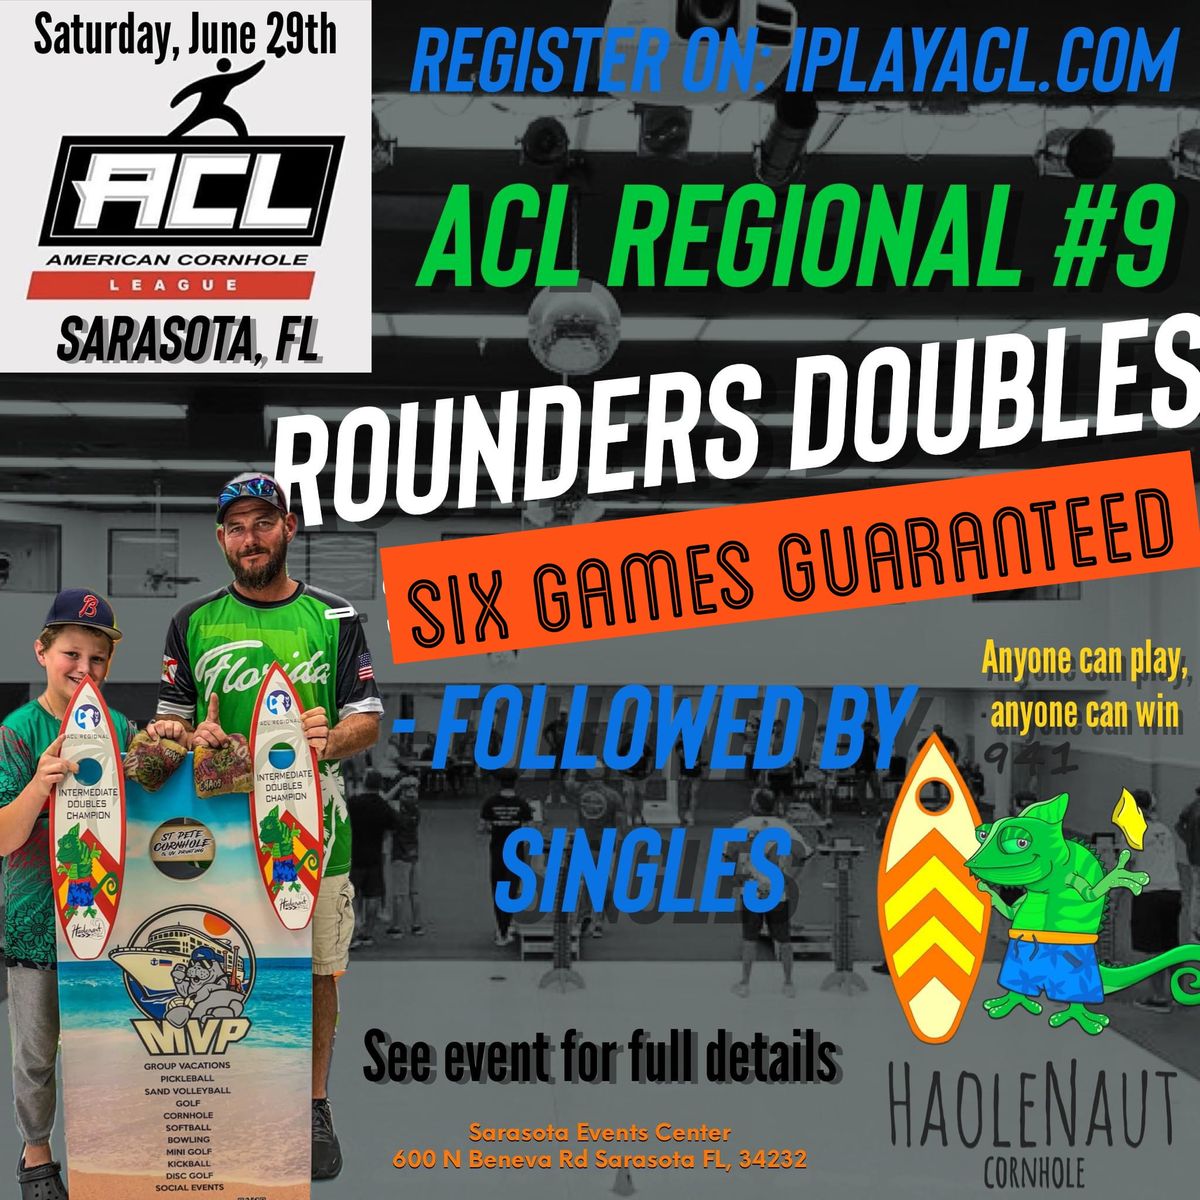 Sarasota - ACL Regional #9 - Rounders Doubles Haolenaut 941 Cornhole